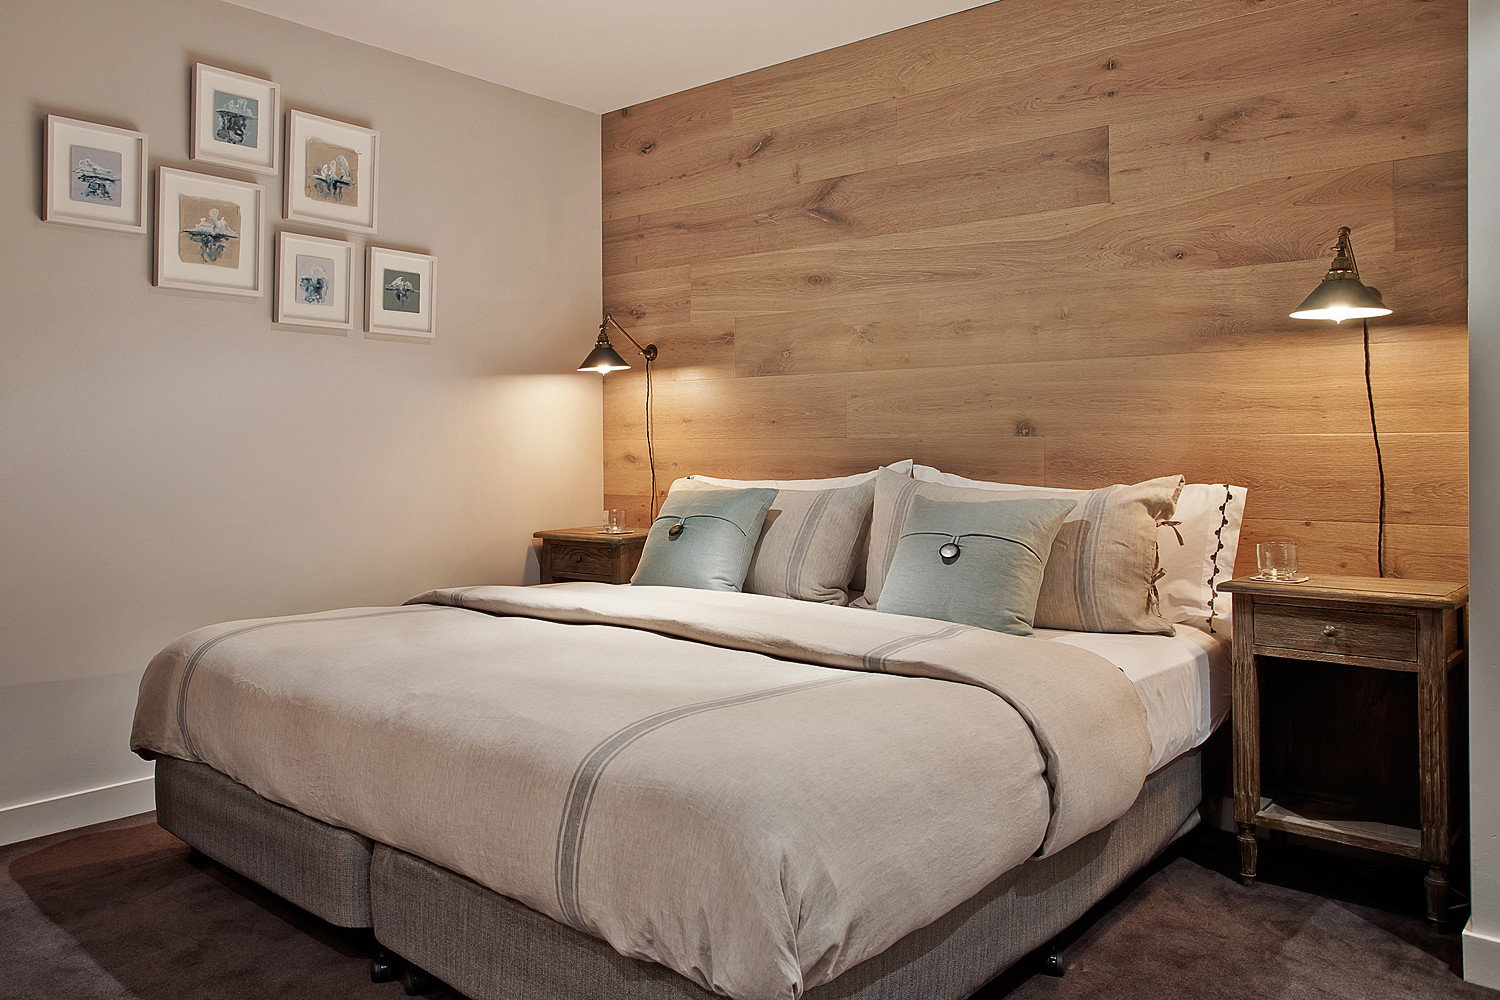 Wall Mounted Bedroom Lighting
 Bedside wall lights Enhance Your Bedroom Decor